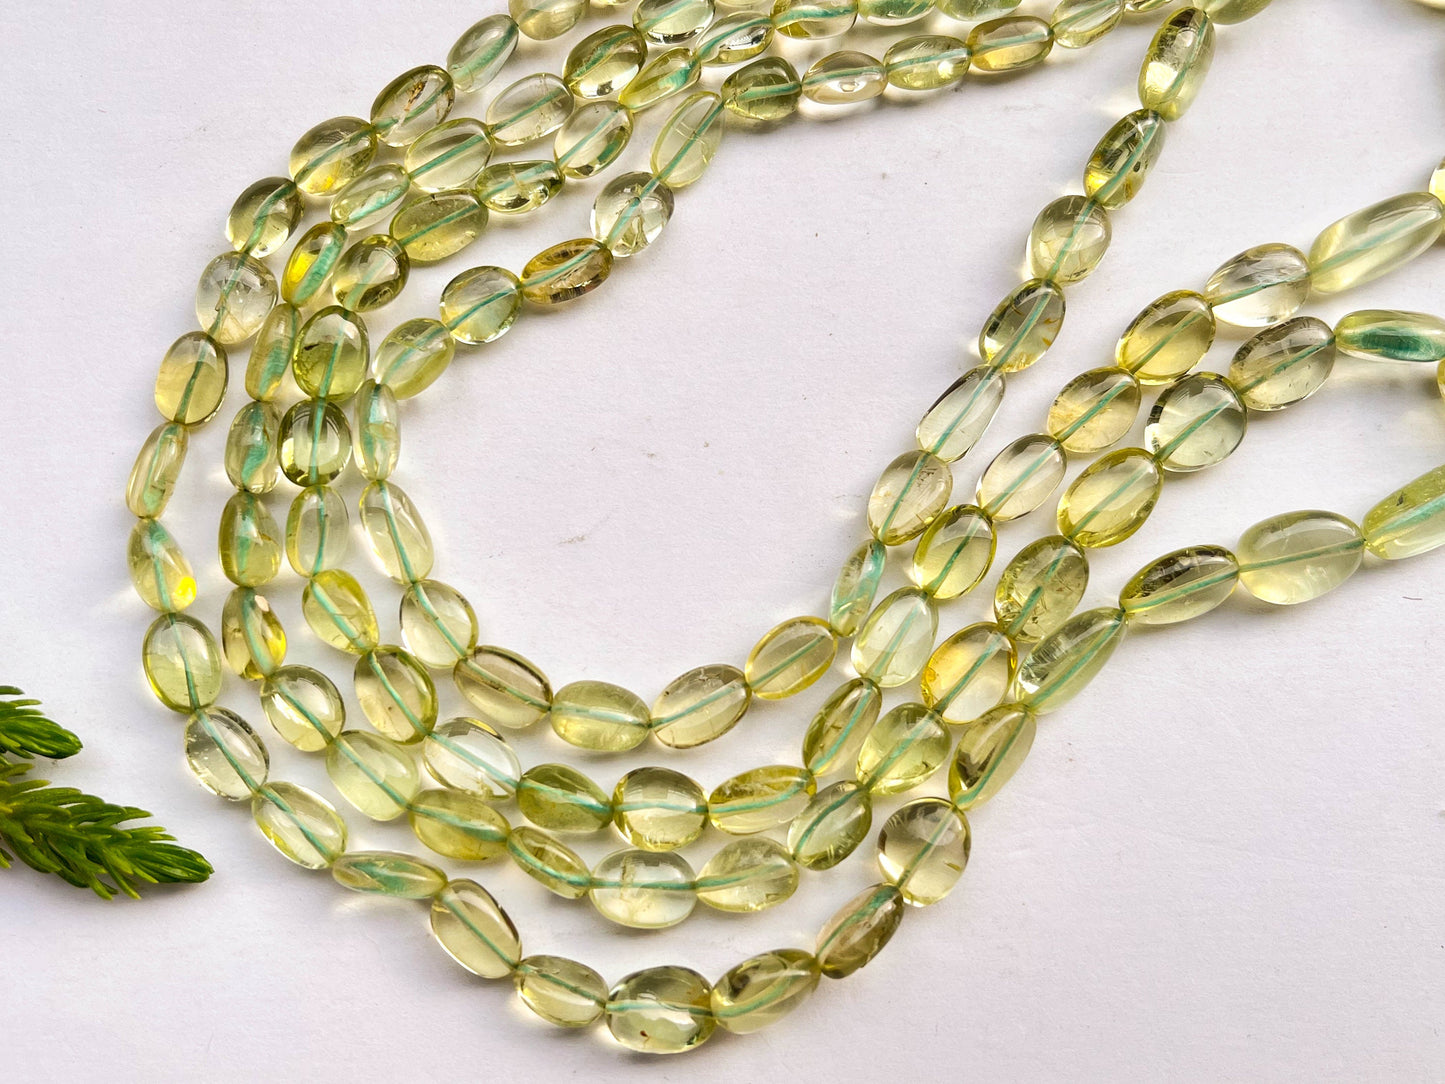 Rare! Yellow Aquamarine Oval Shape Beads, Natural Aquamarine Gemstone Beads, 5x7mm to 9x12mm, 16 Inch String